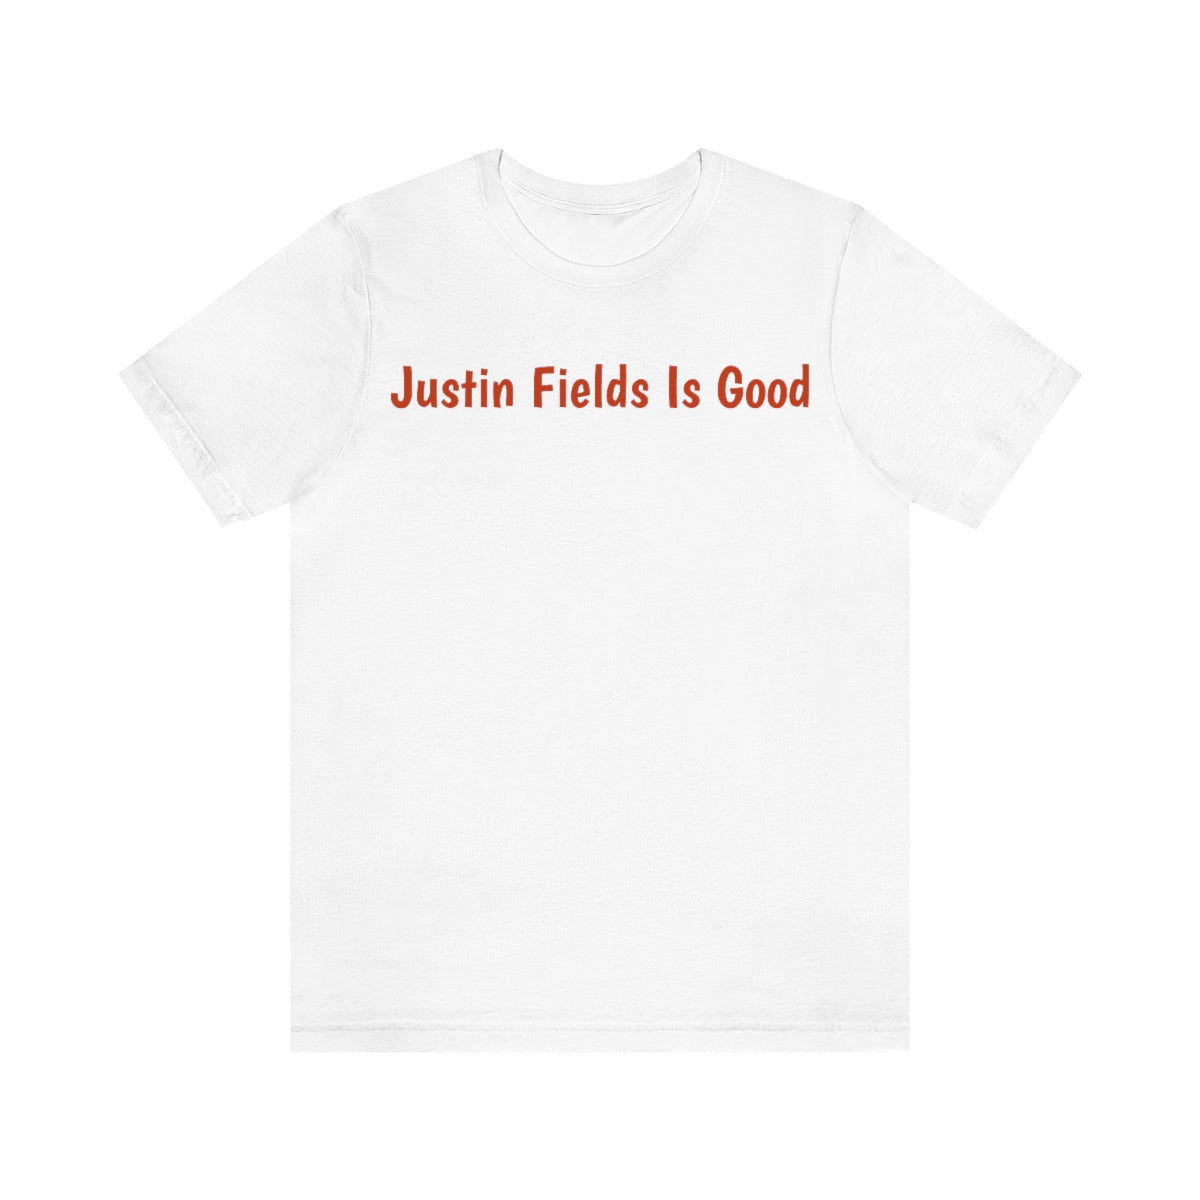 Justin Fields Is Good Tee - IsGoodBrand